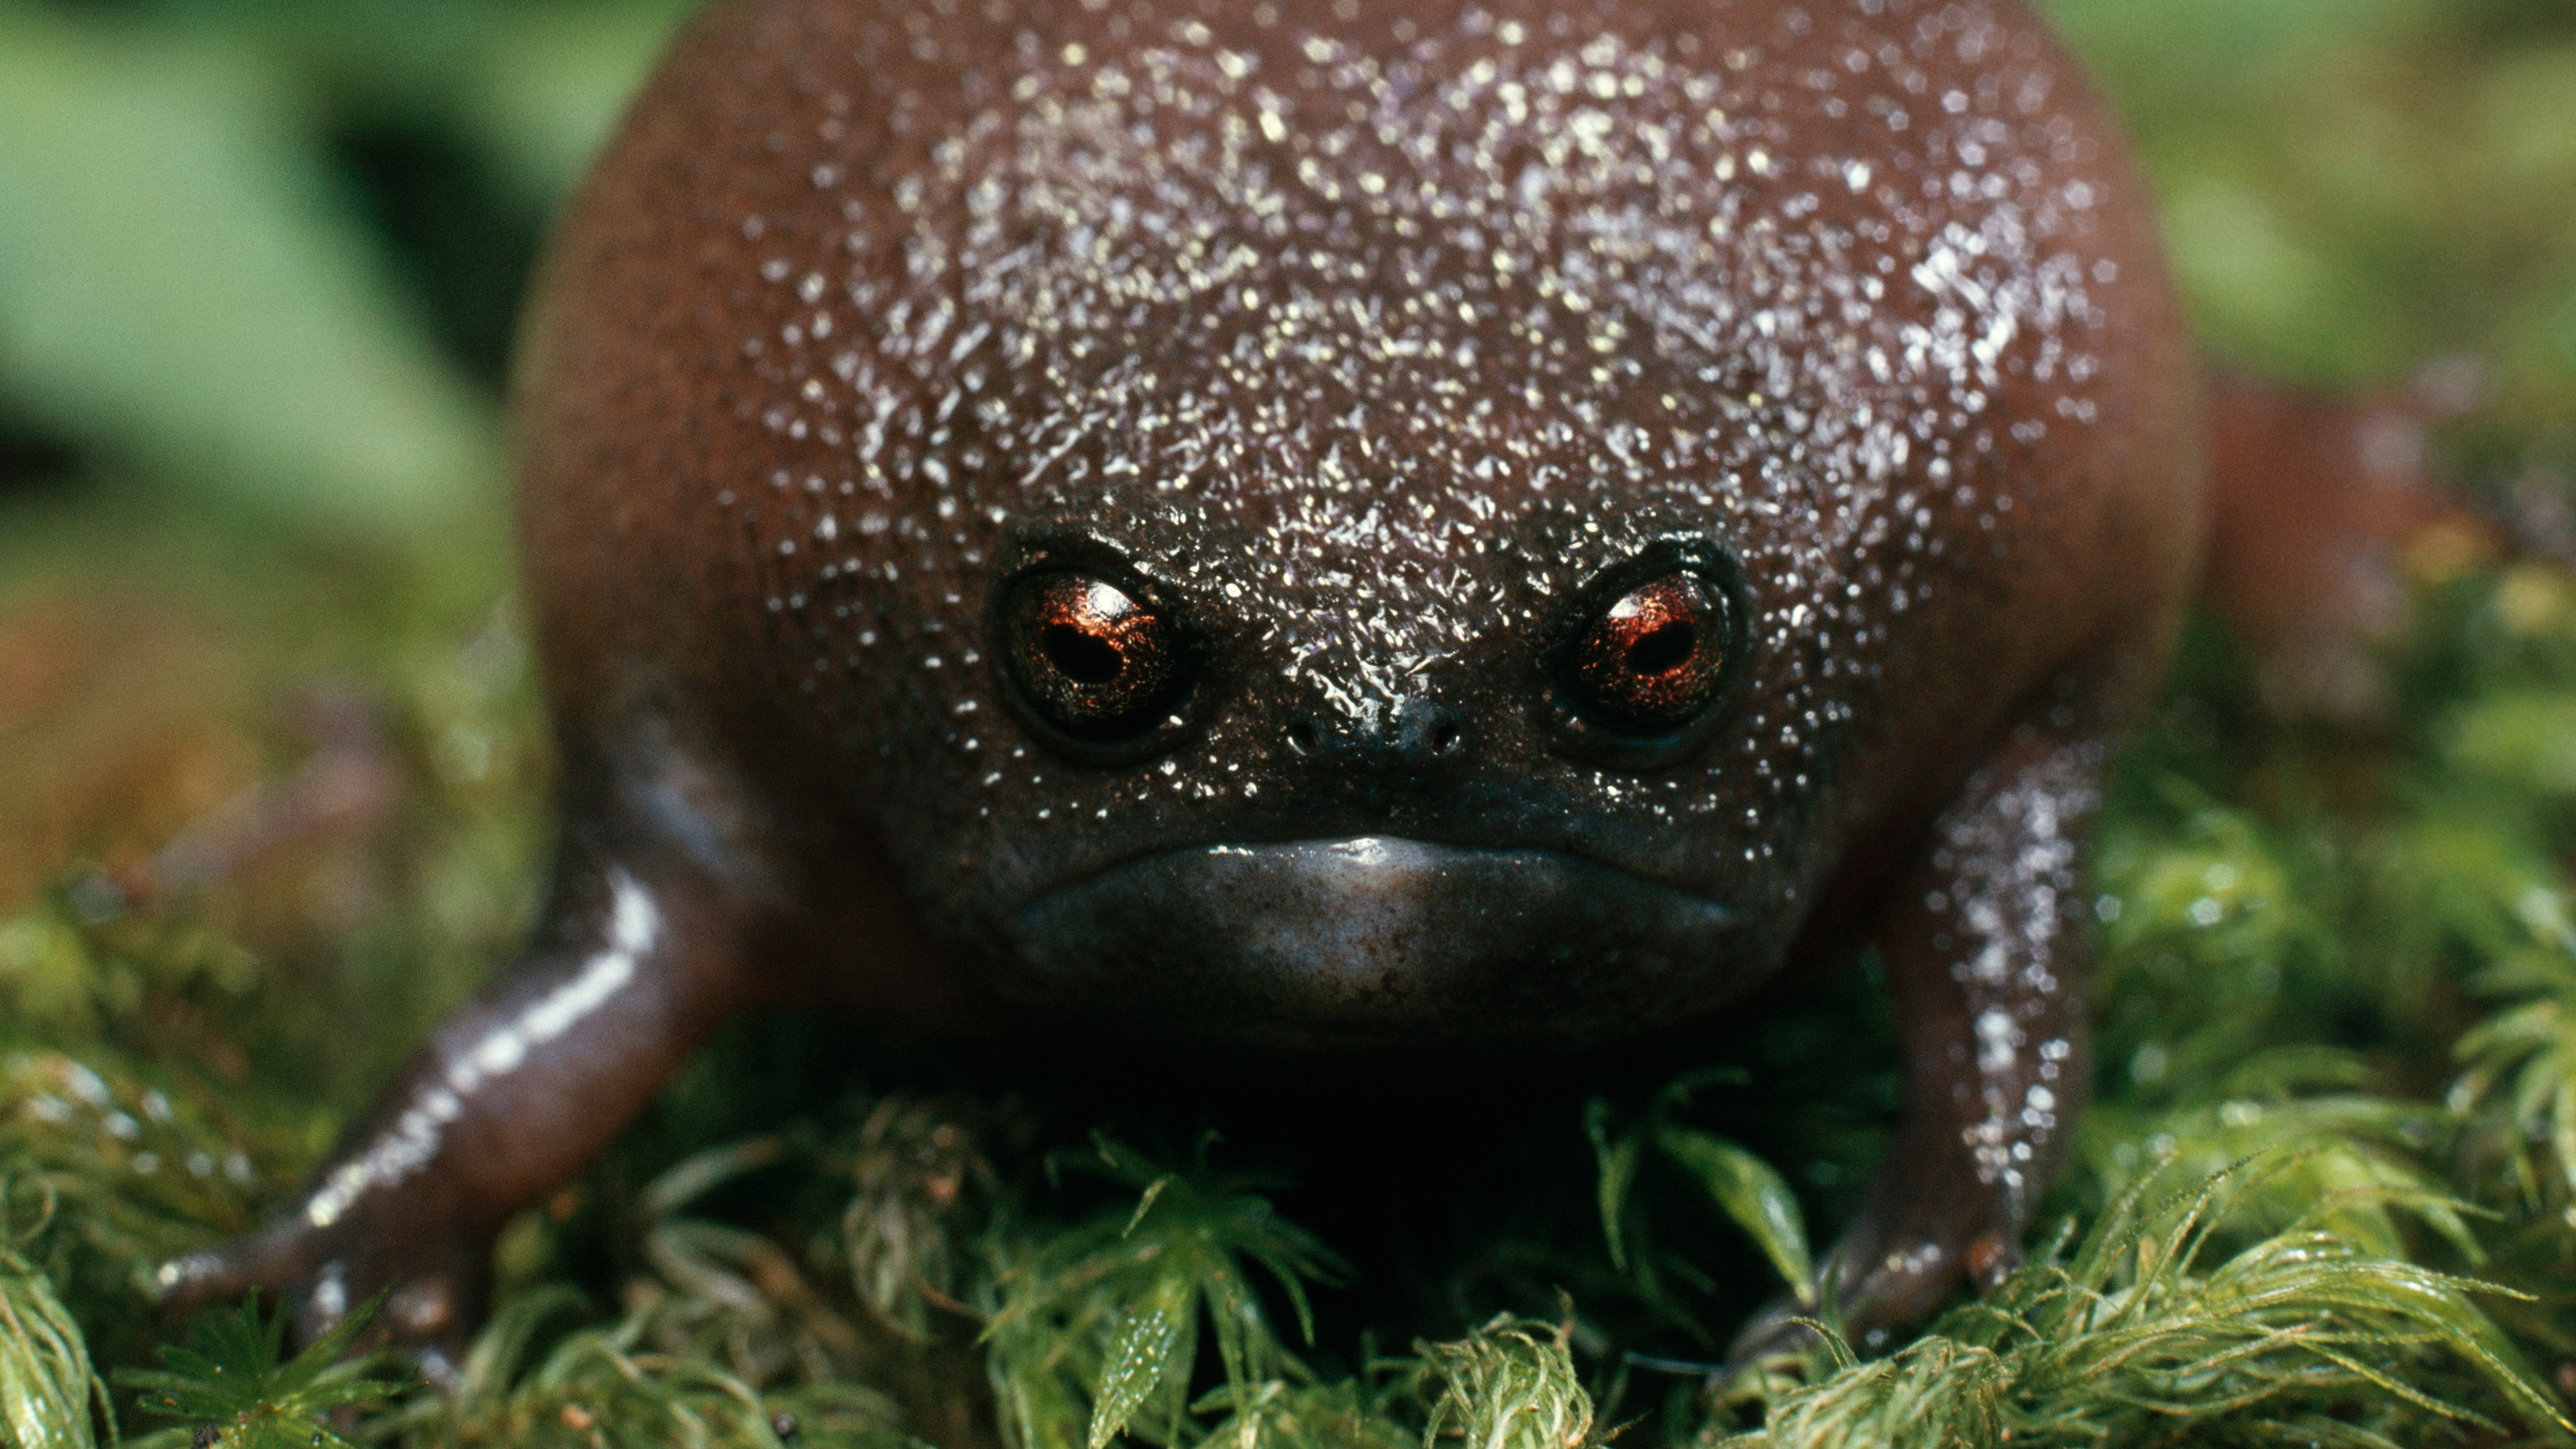 Black rain frog: The bizarre, grumpy-faced amphibian that's